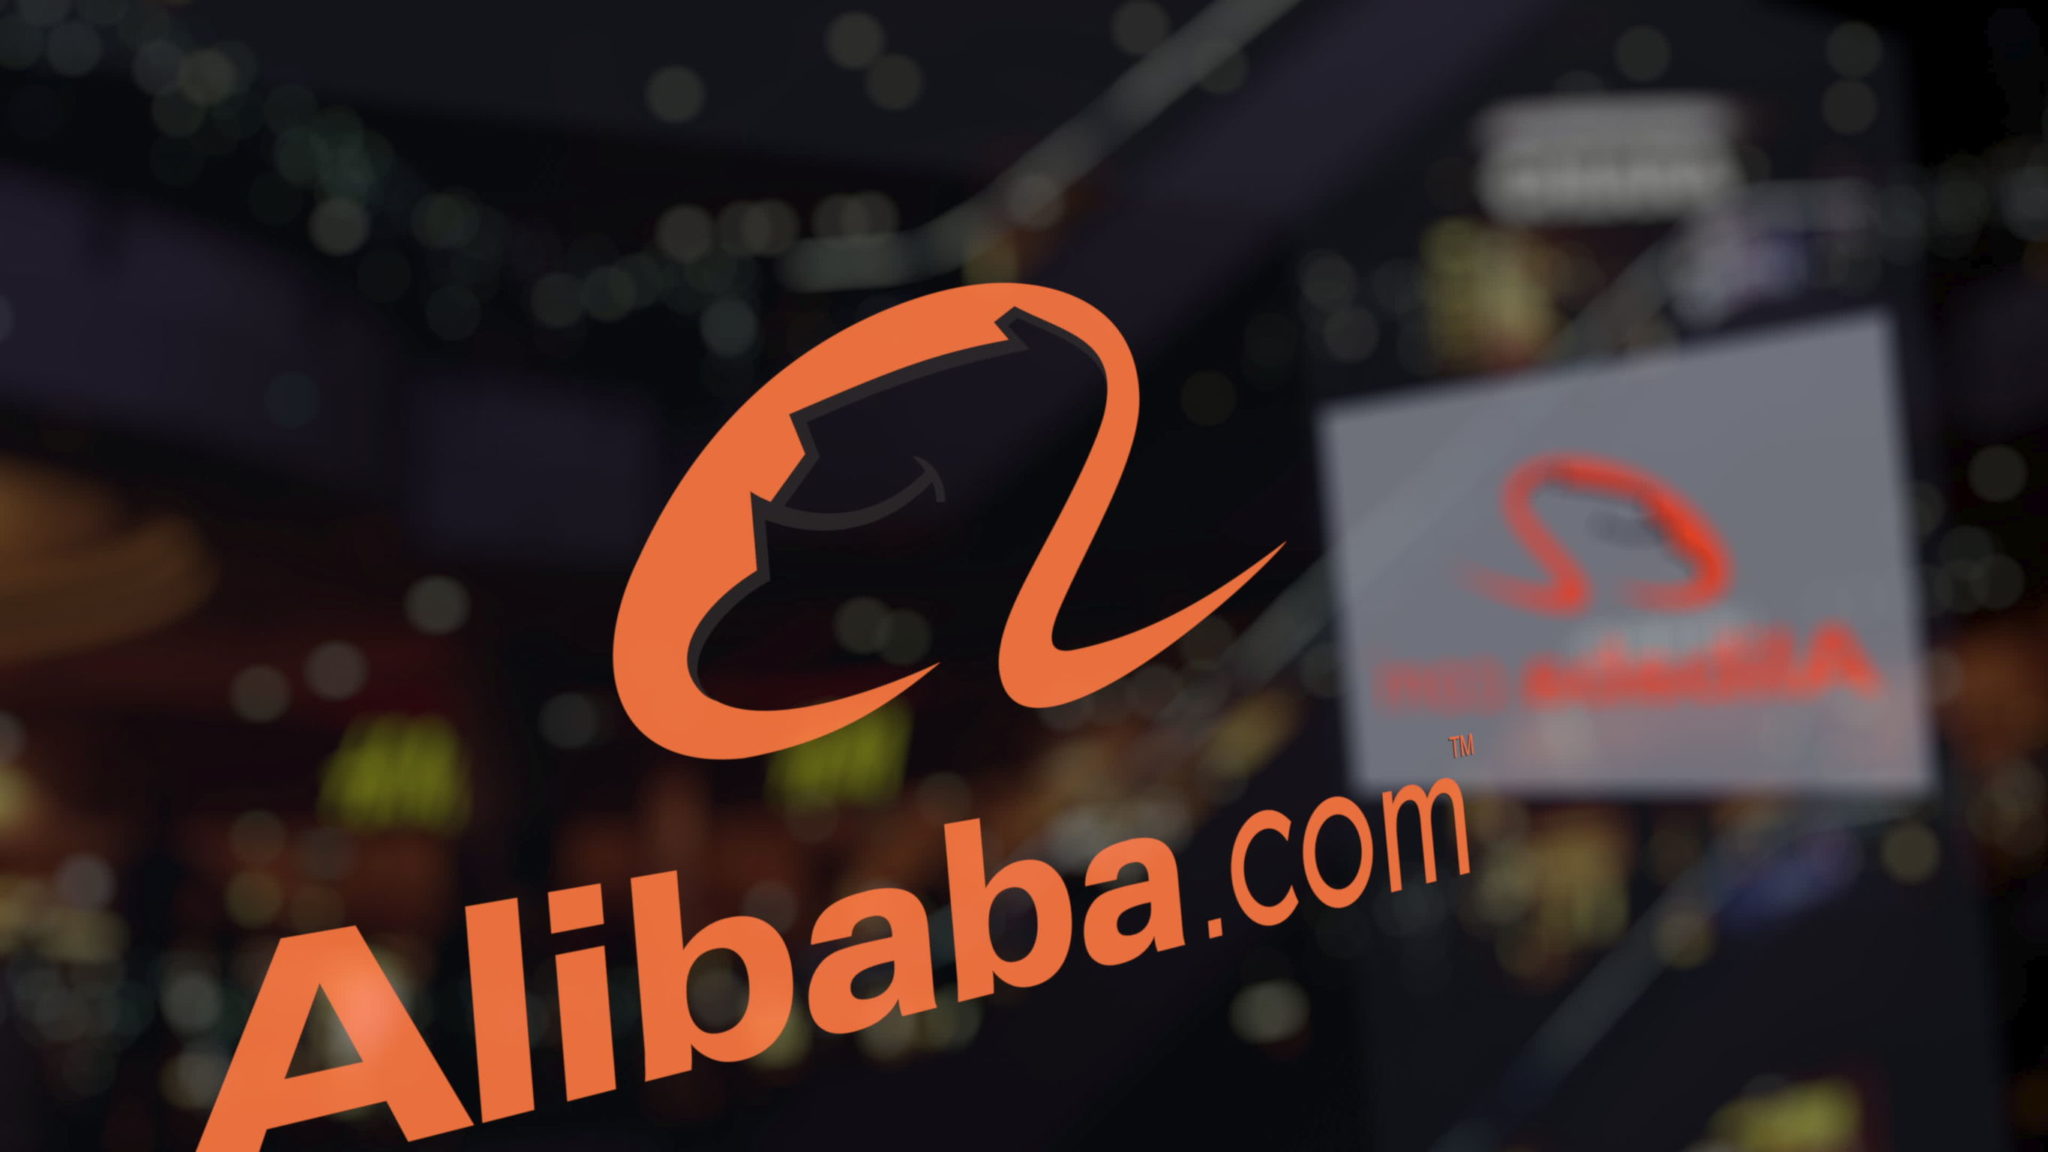 Alibaba earnings beat forecast, warns revenue to take hit from coronavirus outbreak